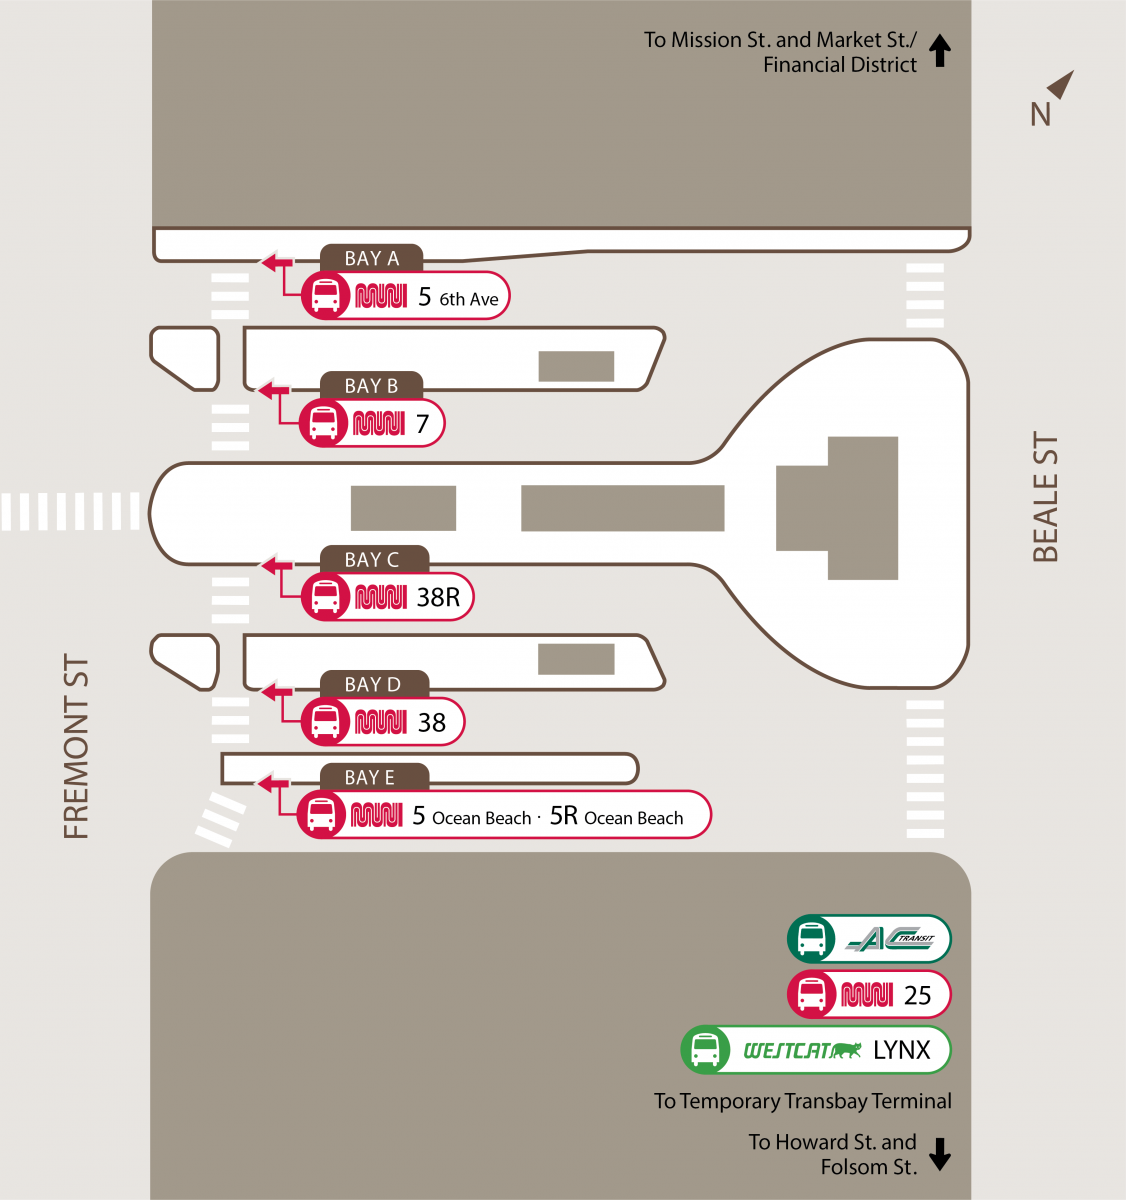 Diagram of Bus Plaza boarding locations